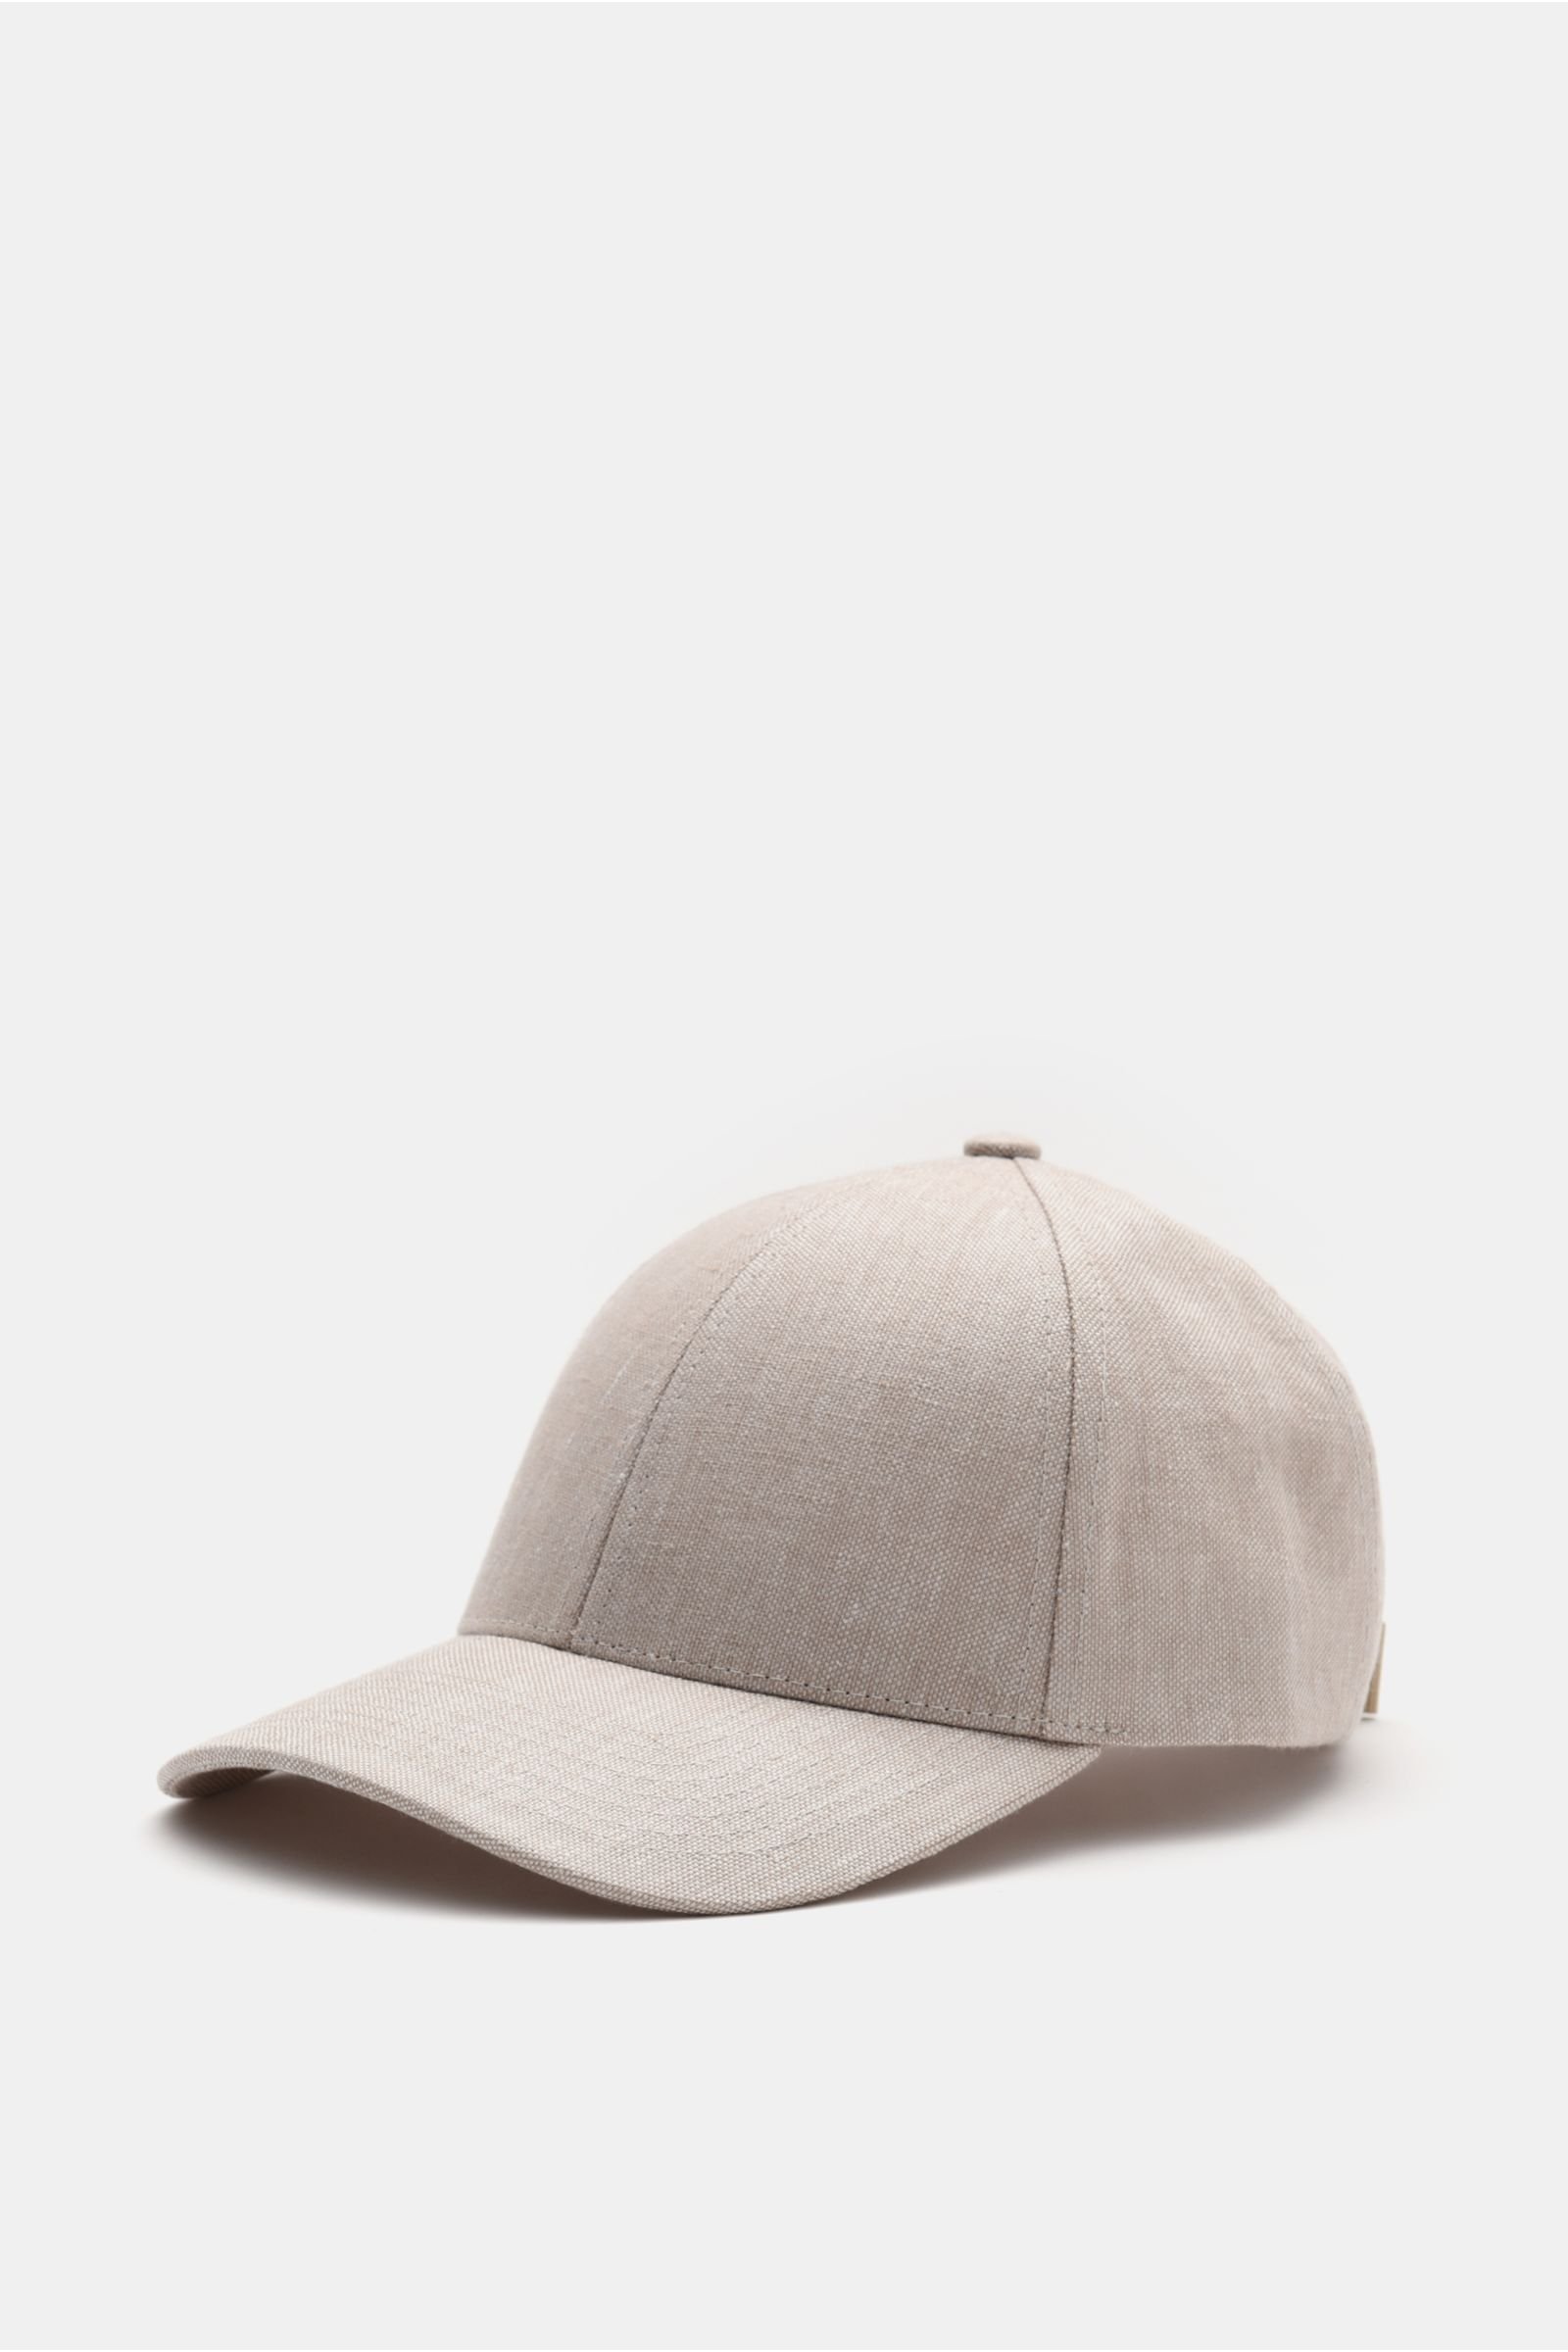 | HEADWEAR baseball BRAUN linen beige Hamburg VARSITY cap